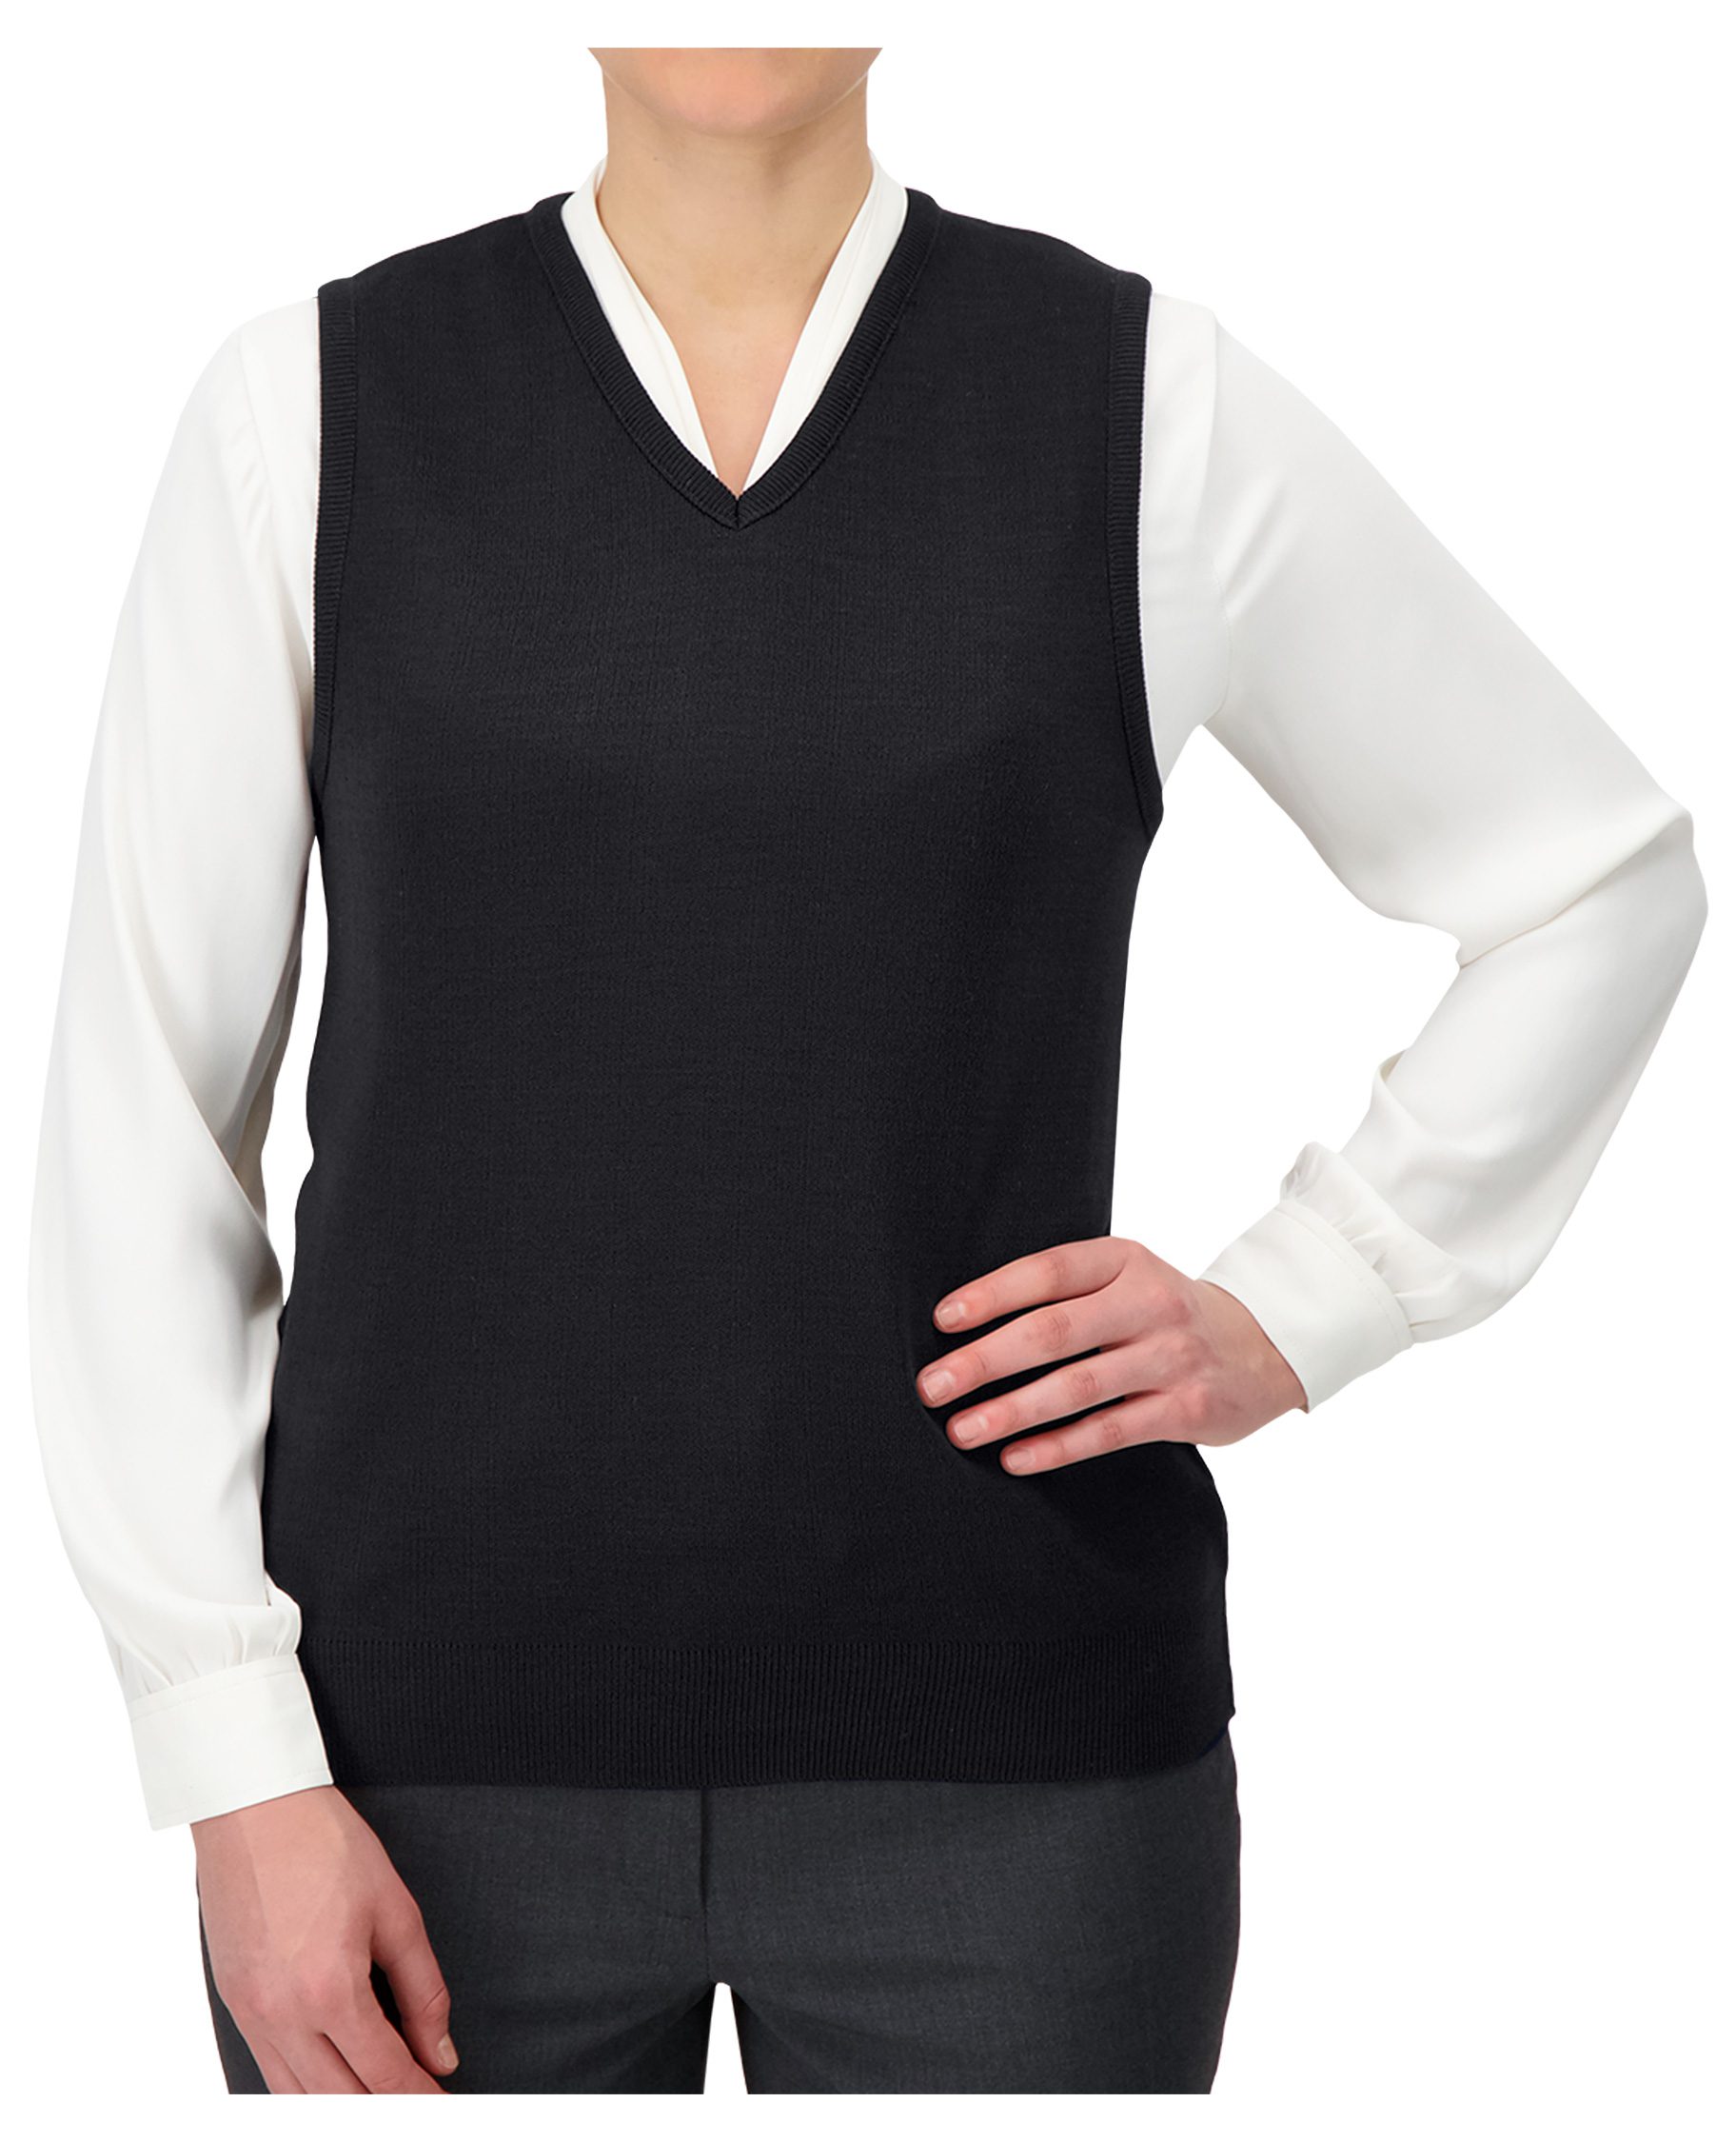 Cobmex Ladies "Cashmere"-Like V-Neck Vest #3109 Black